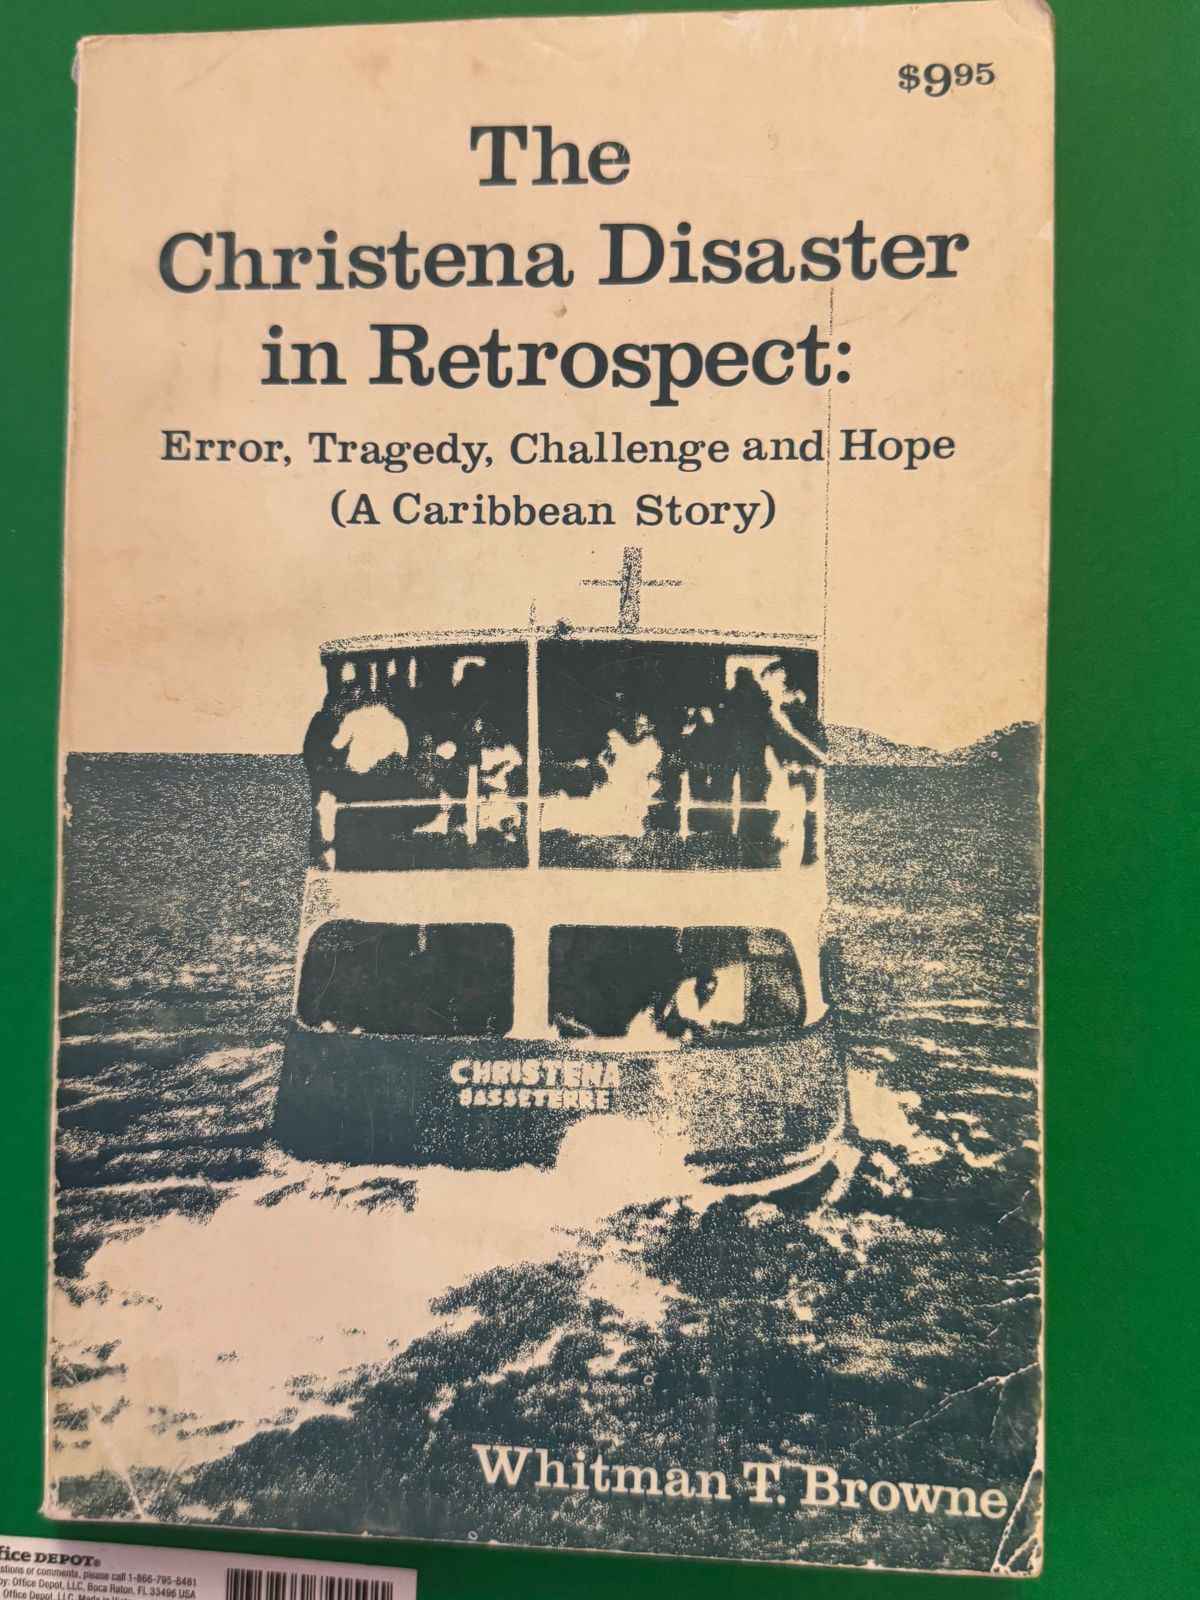 The Christena Disaster in Retrospect.